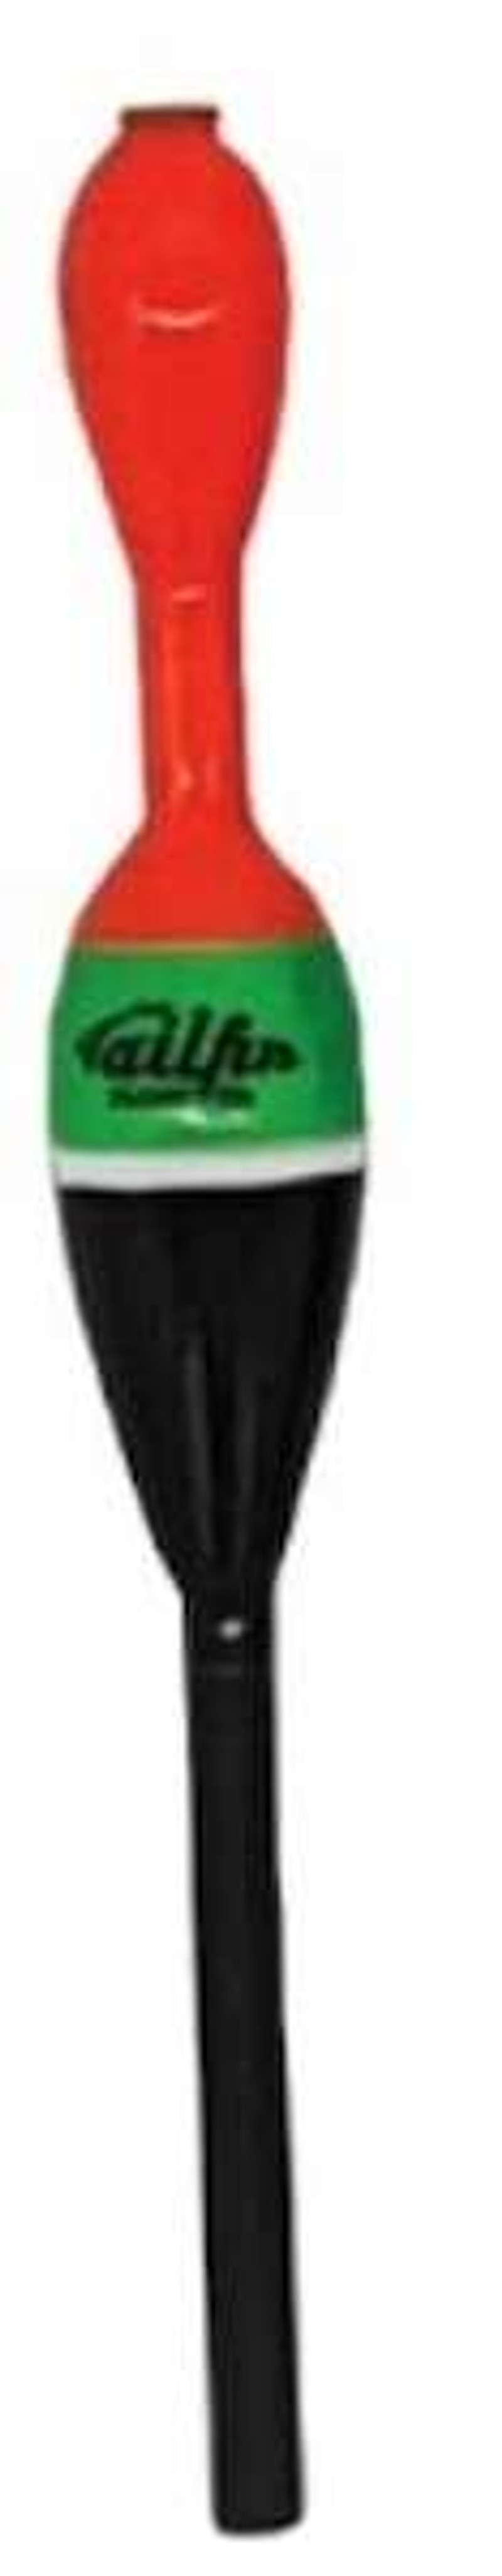 Tailfin Premium Slip Floats - 1/2in - 2pk - TackleDirect